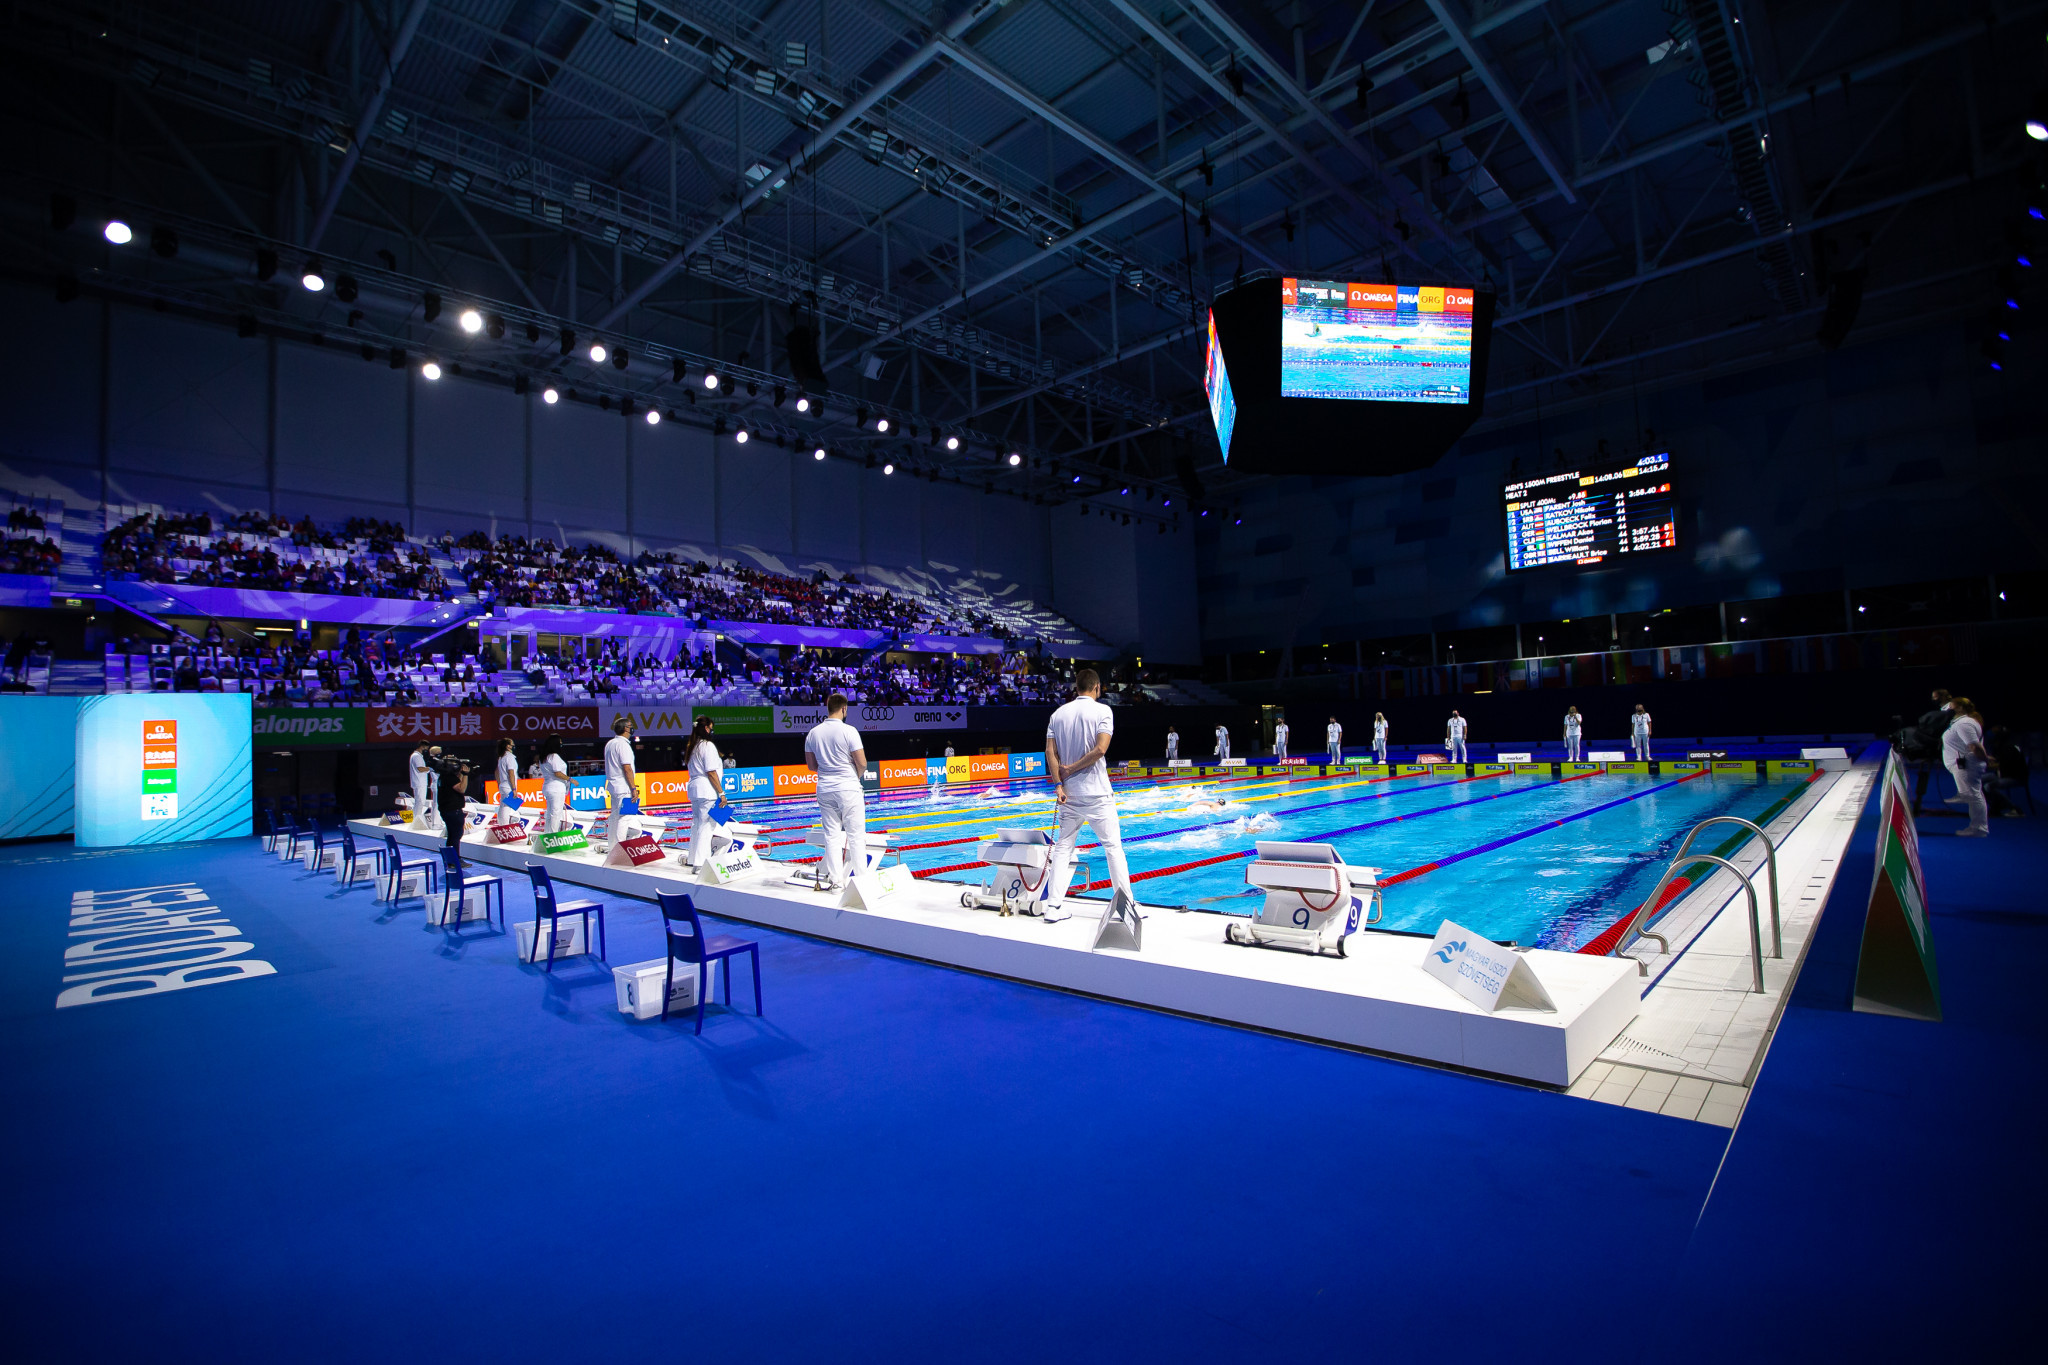 Budapest to host additional FINA World Aquatics Championships in 2022